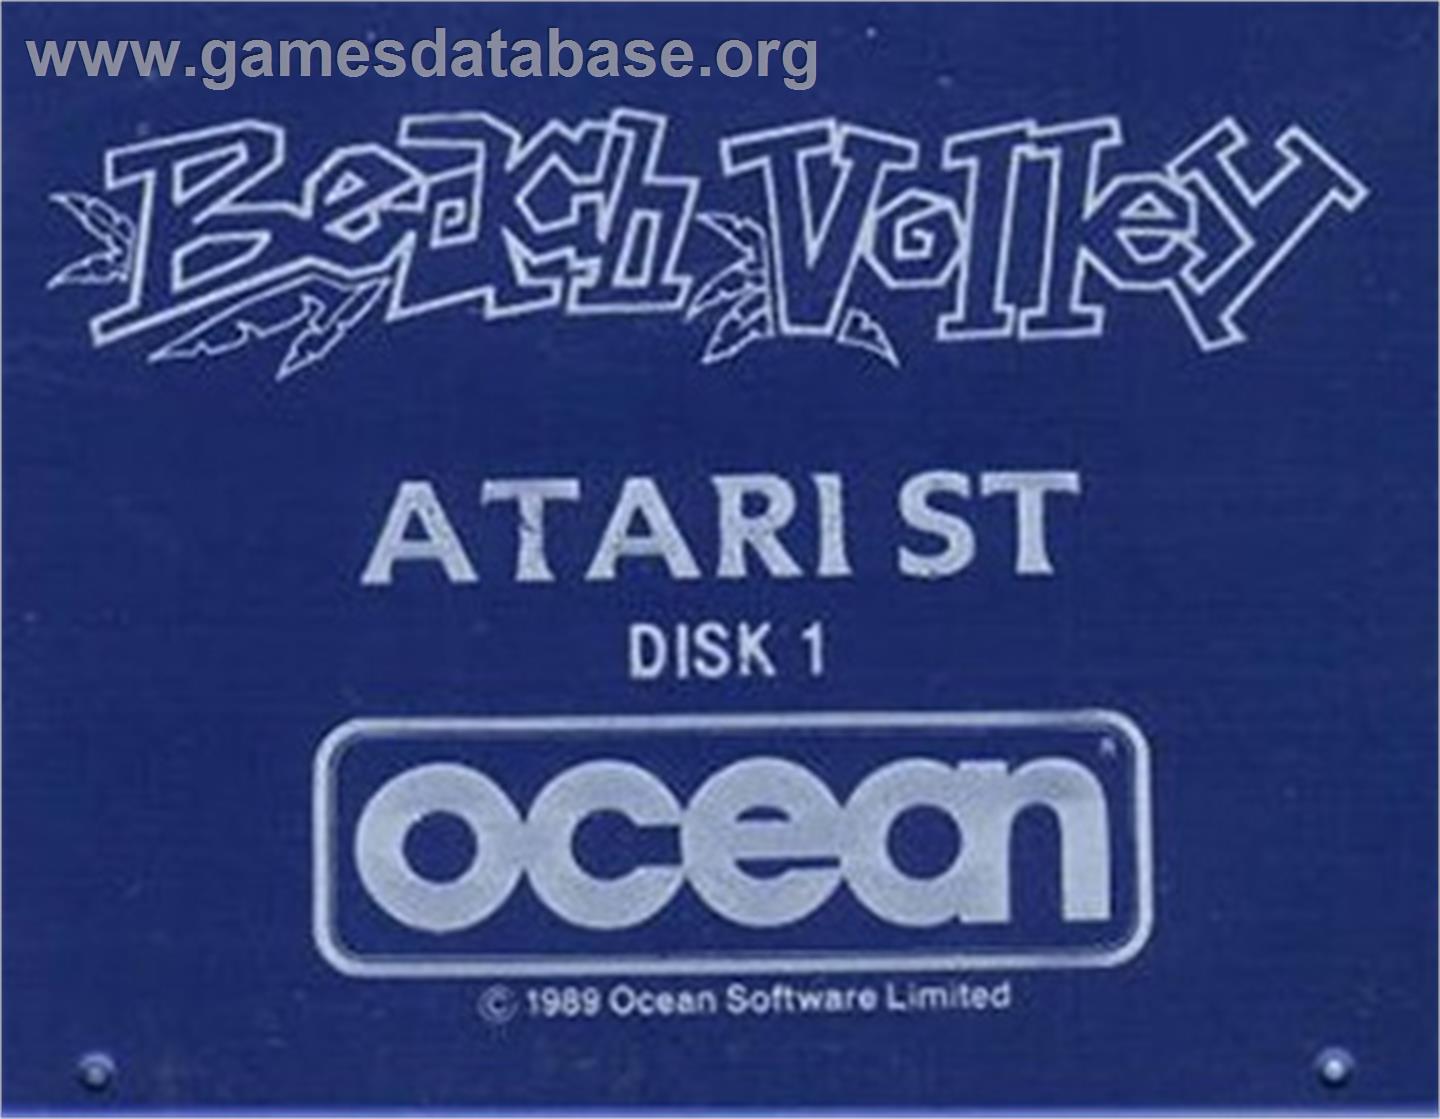 Beach Volley - Atari ST - Artwork - Cartridge Top